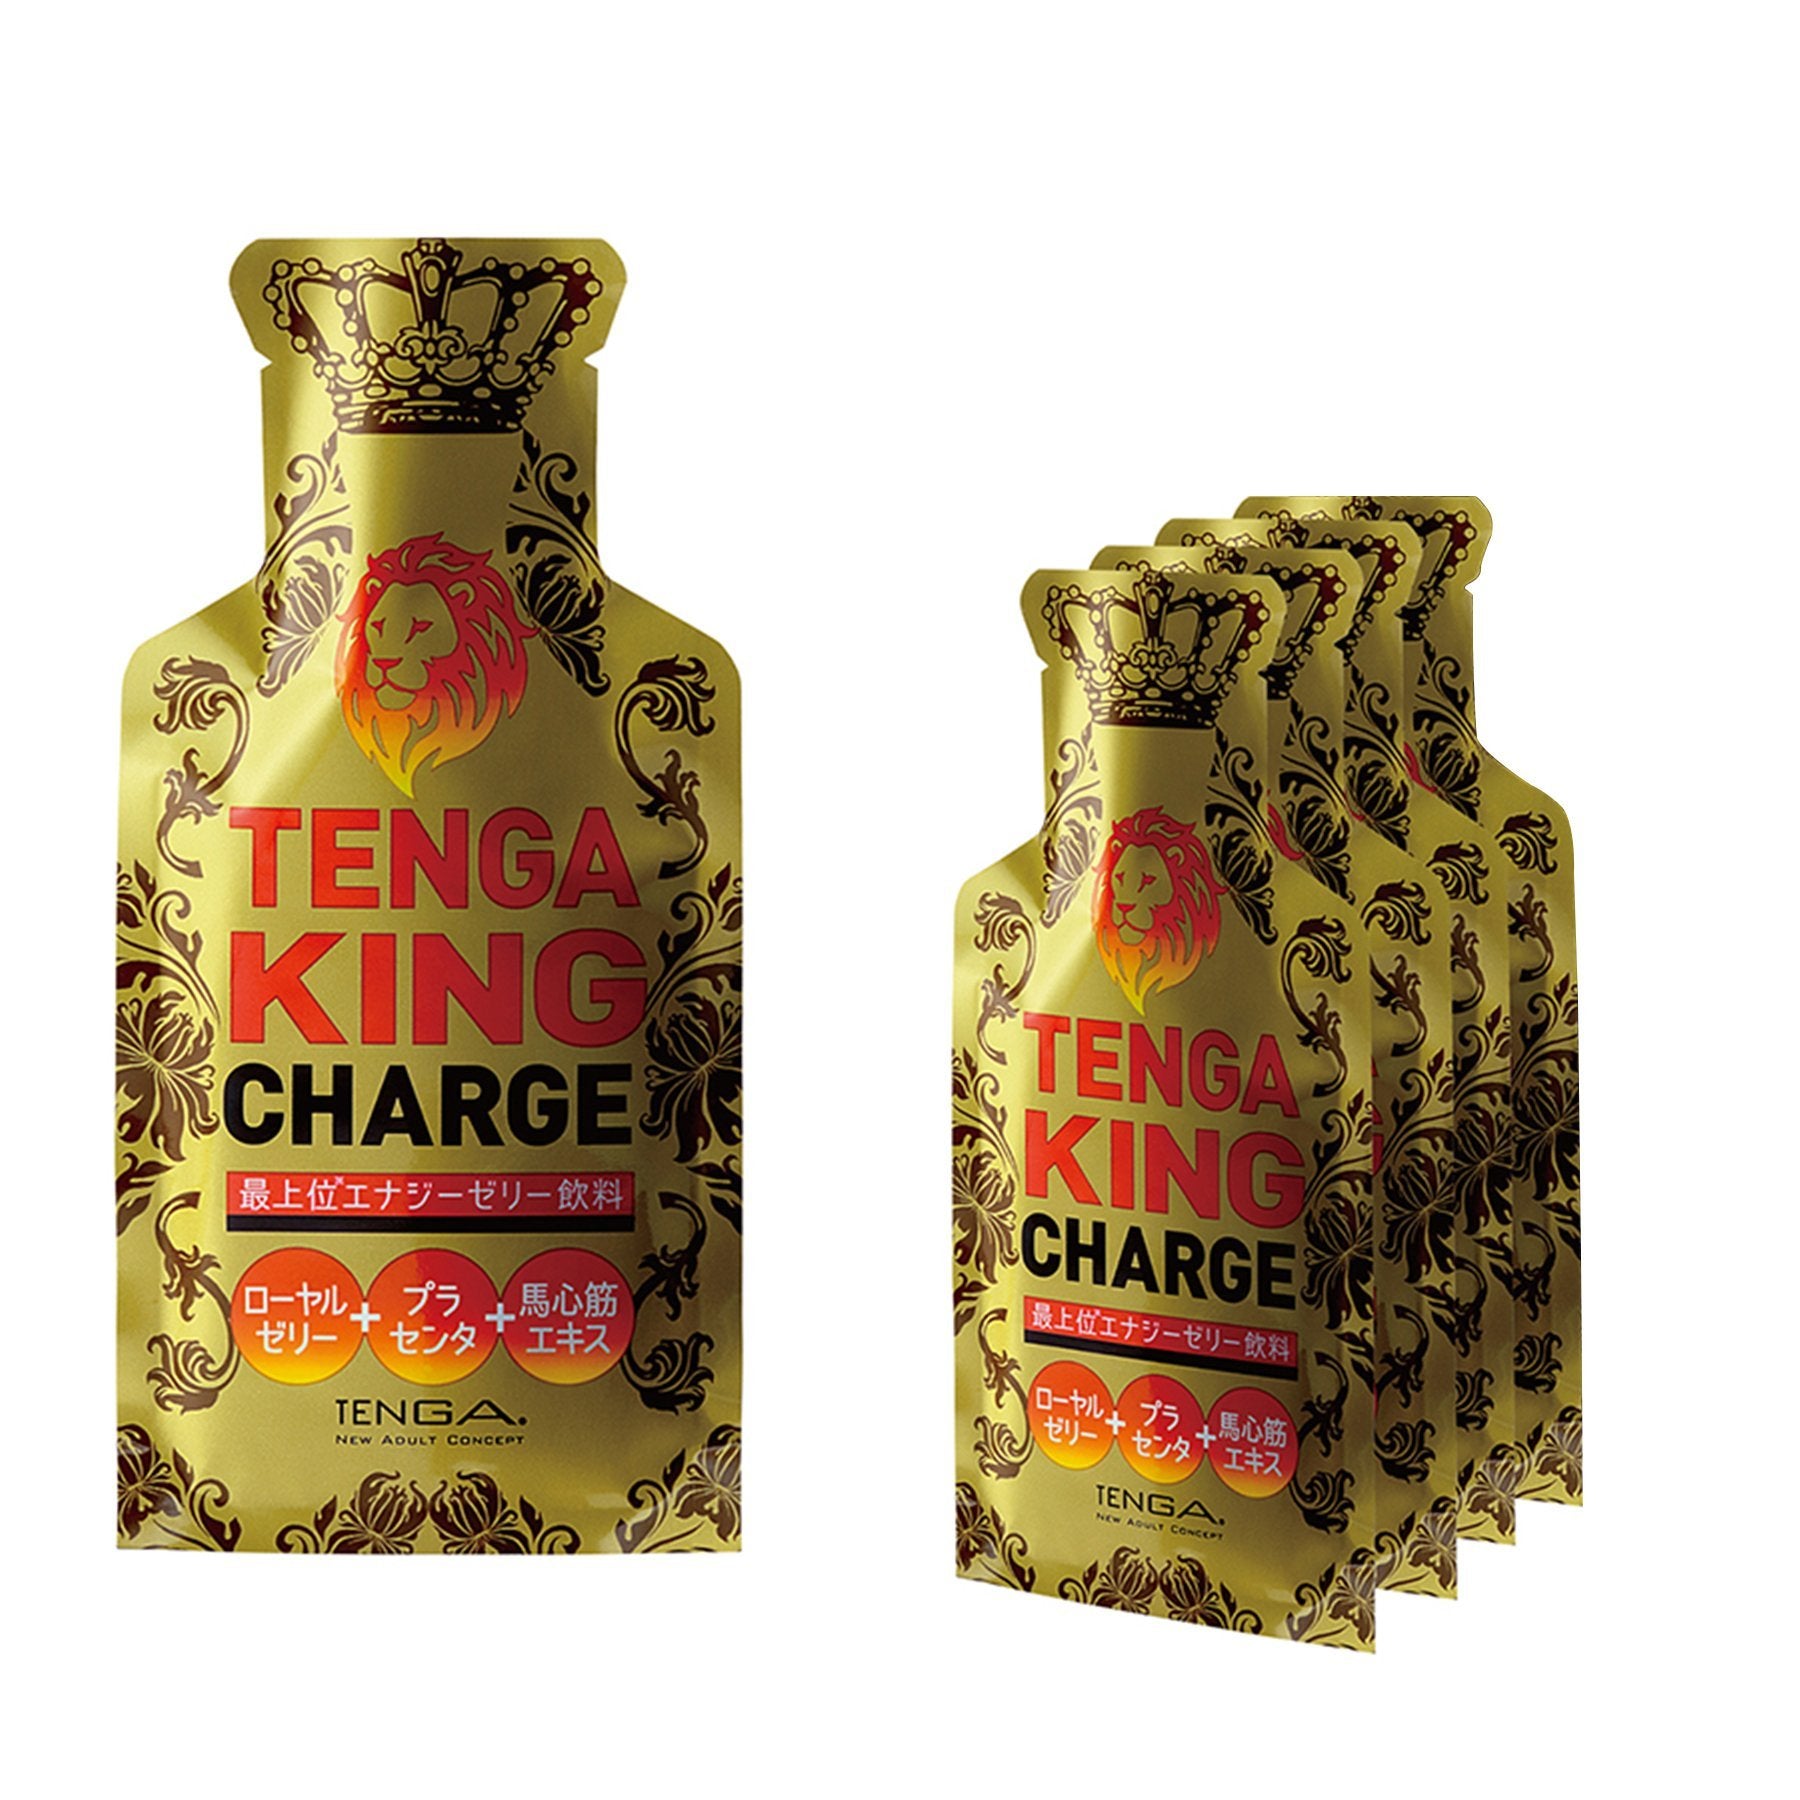 TENGA KING CHARGE 最上位能量果凍飲料 - tengacharge